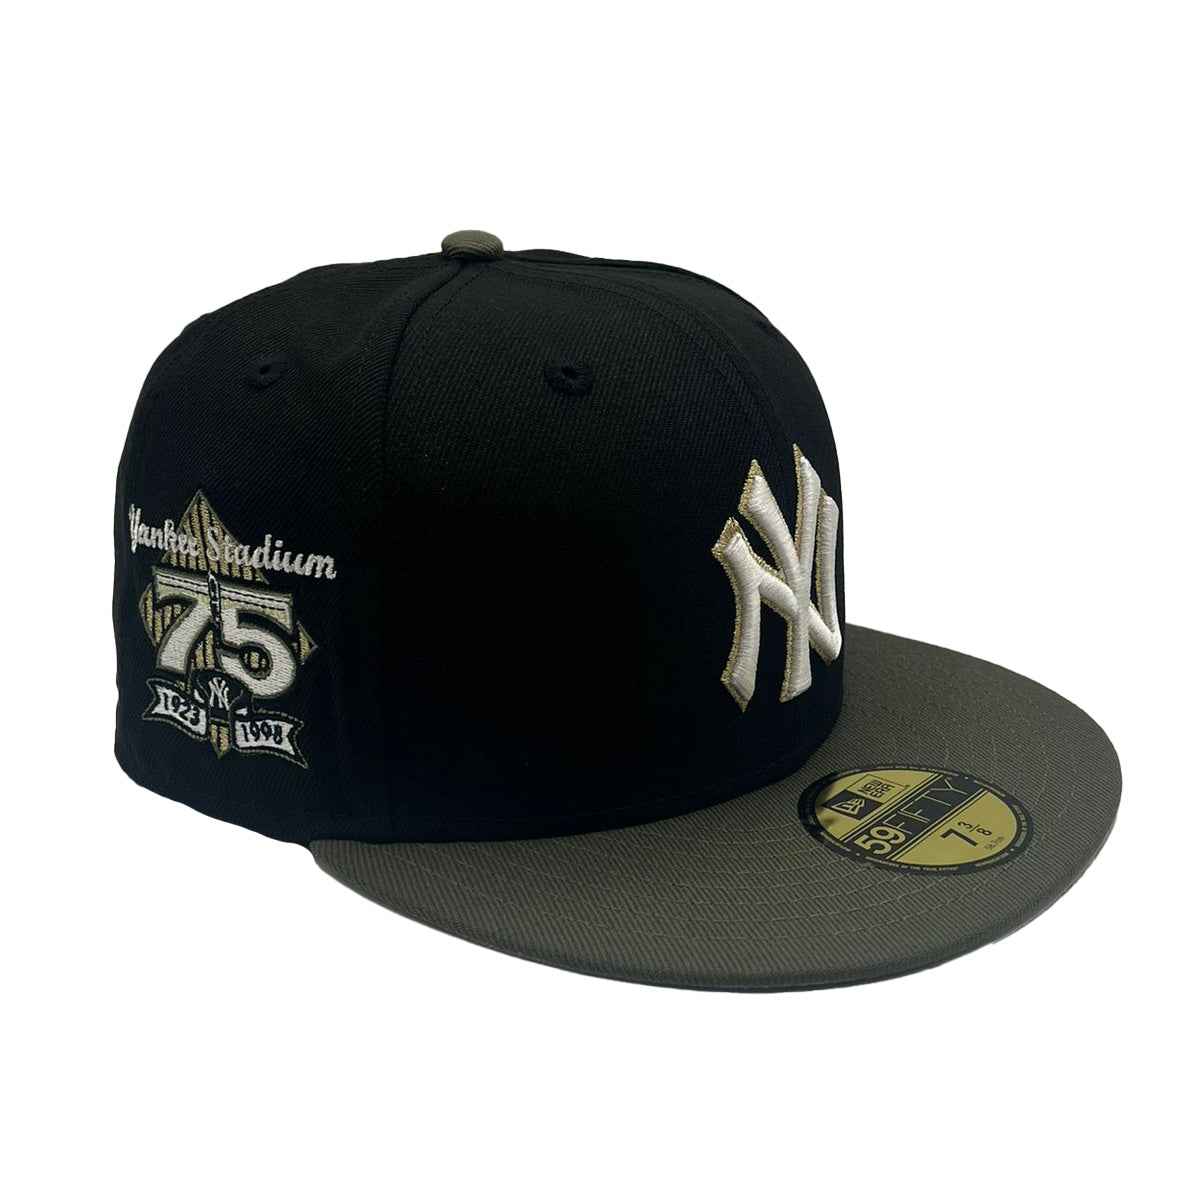 Buy Premium New Era New York Yankees Black 59FIFTY Fitted Cap